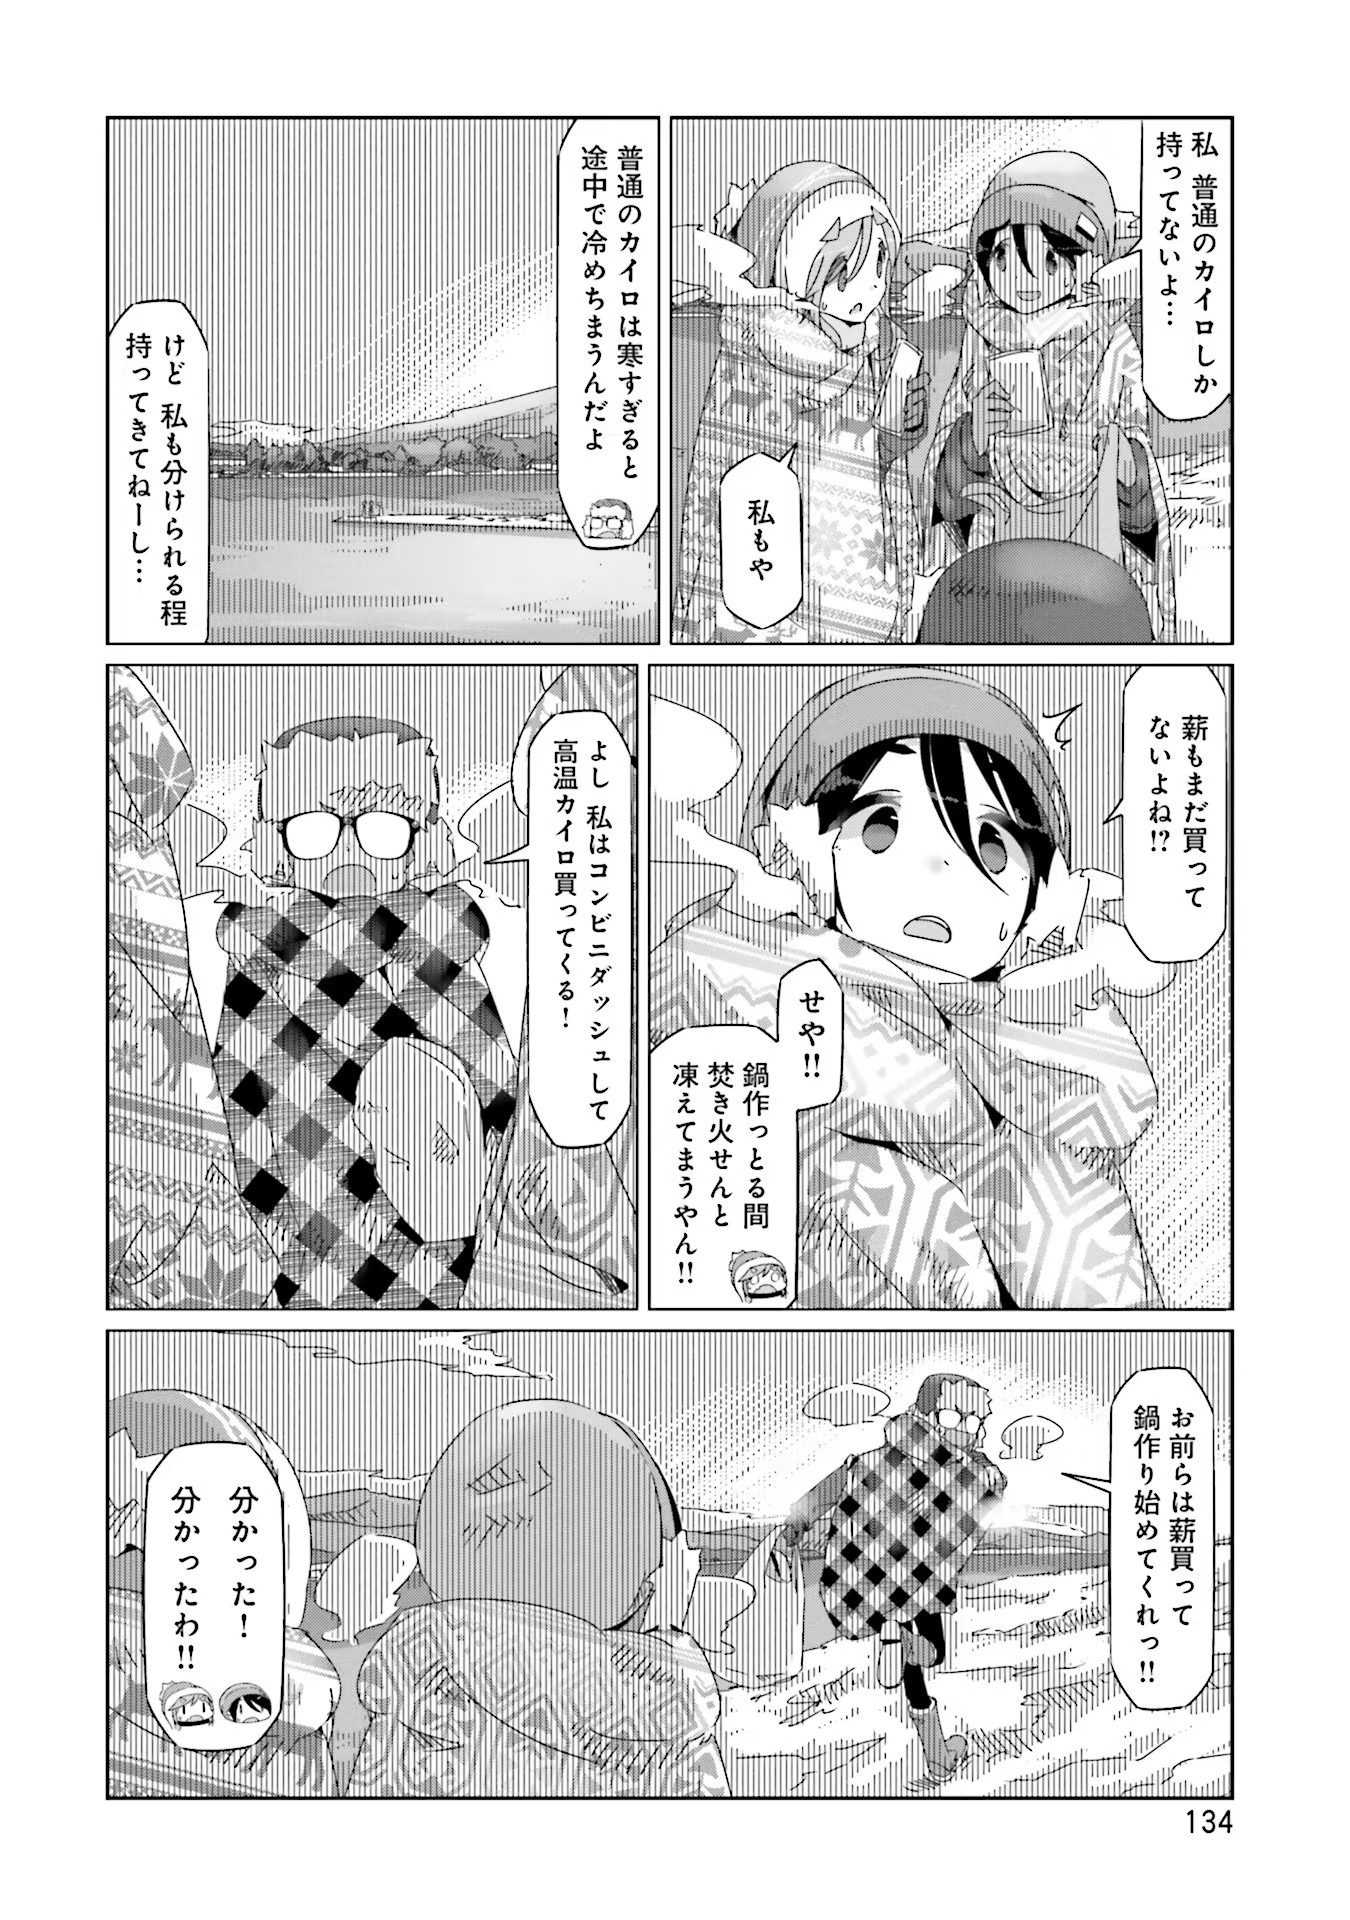 Yuru Camp - Chapter 34 - Page 2